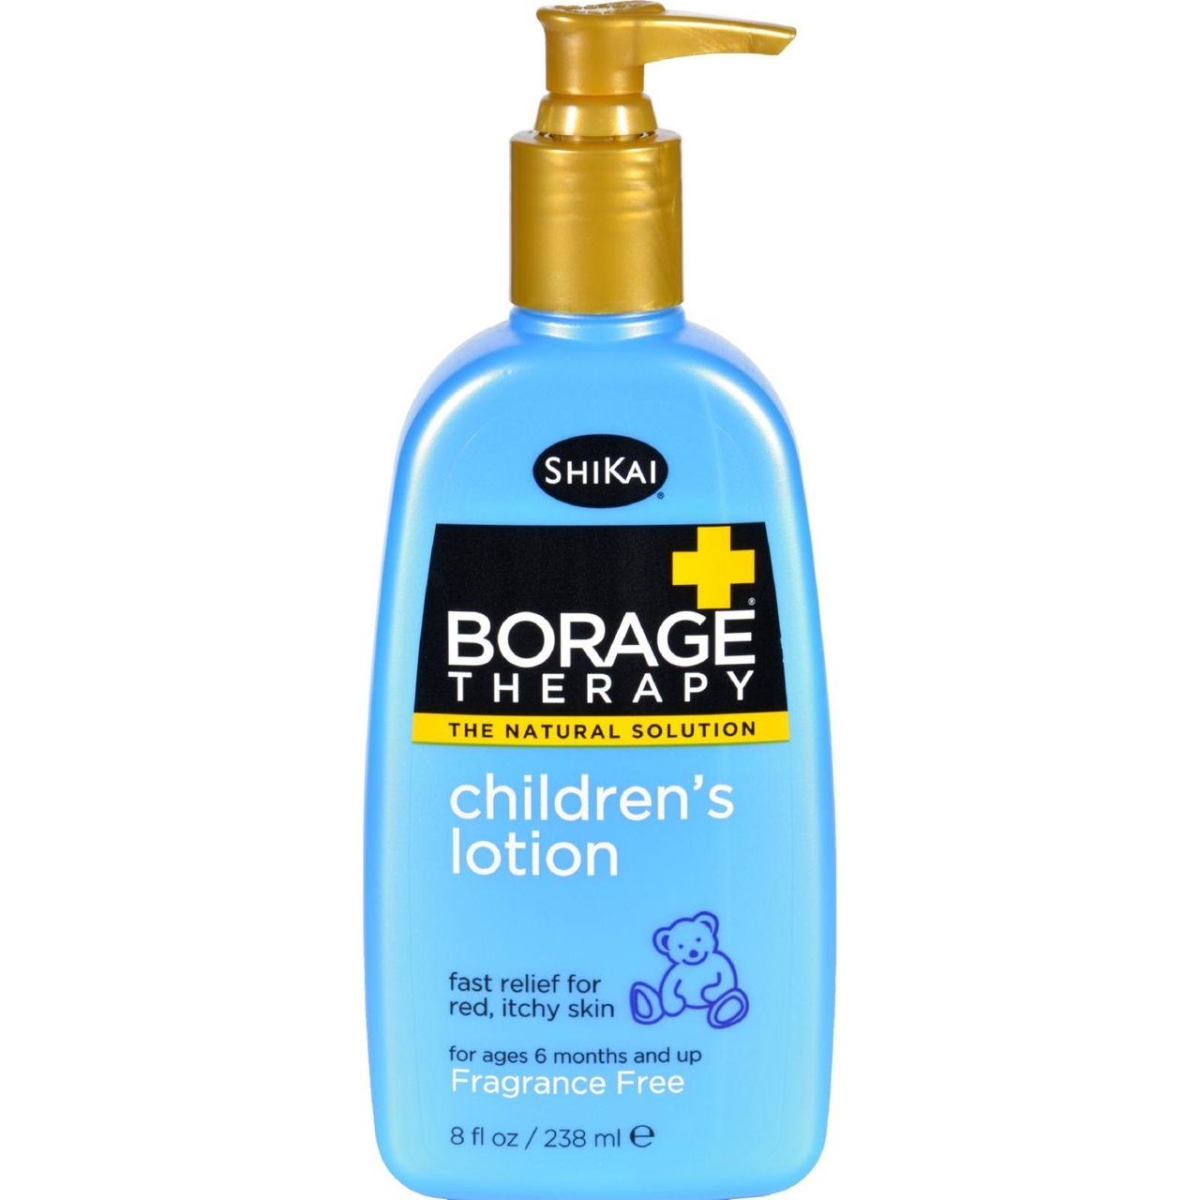 Hg0947663 8 Fl Oz Borage Therapy Childrens Lotion - Fragrance Free